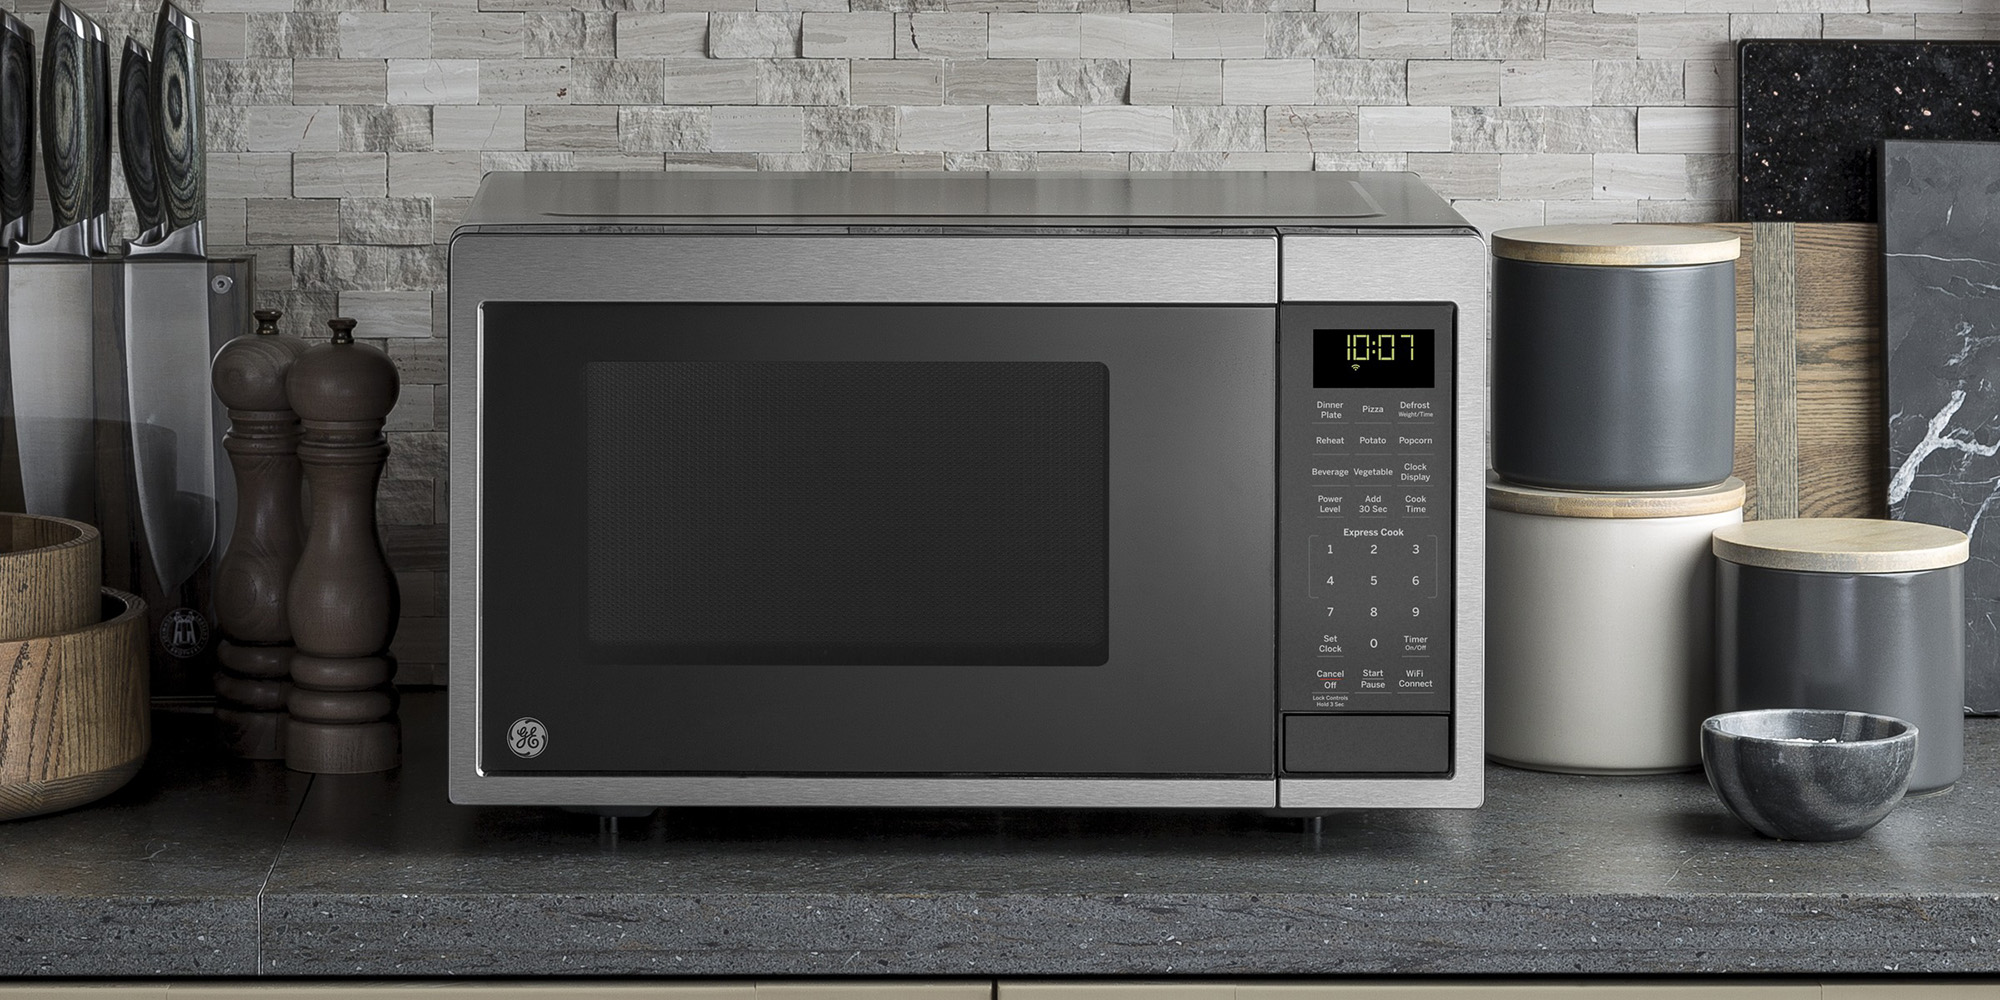 smart microwave google home